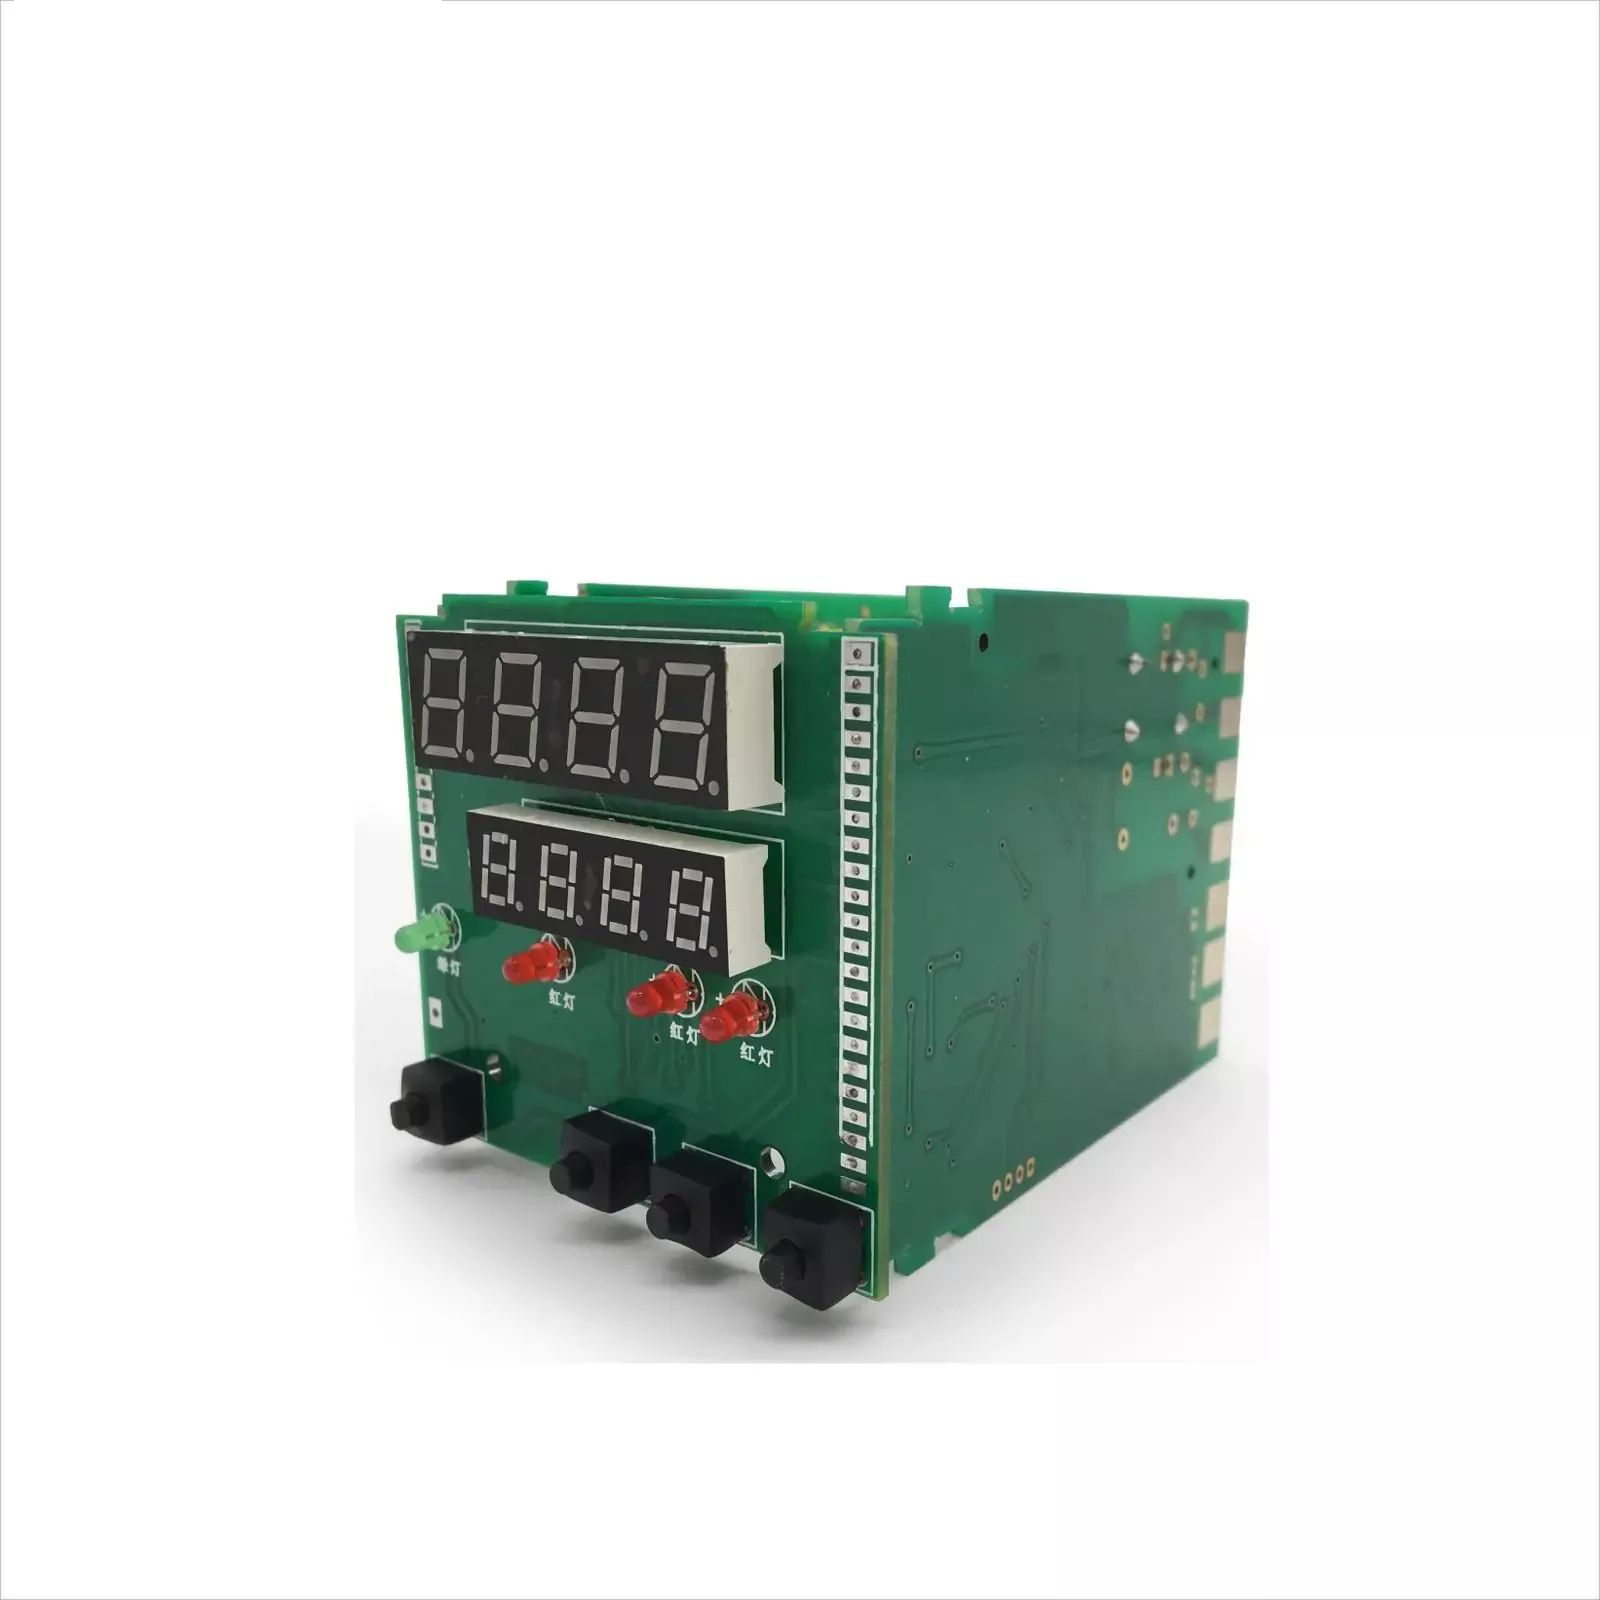 REX-C700 Industrial multifunctional Digital Modular PID temperature controller